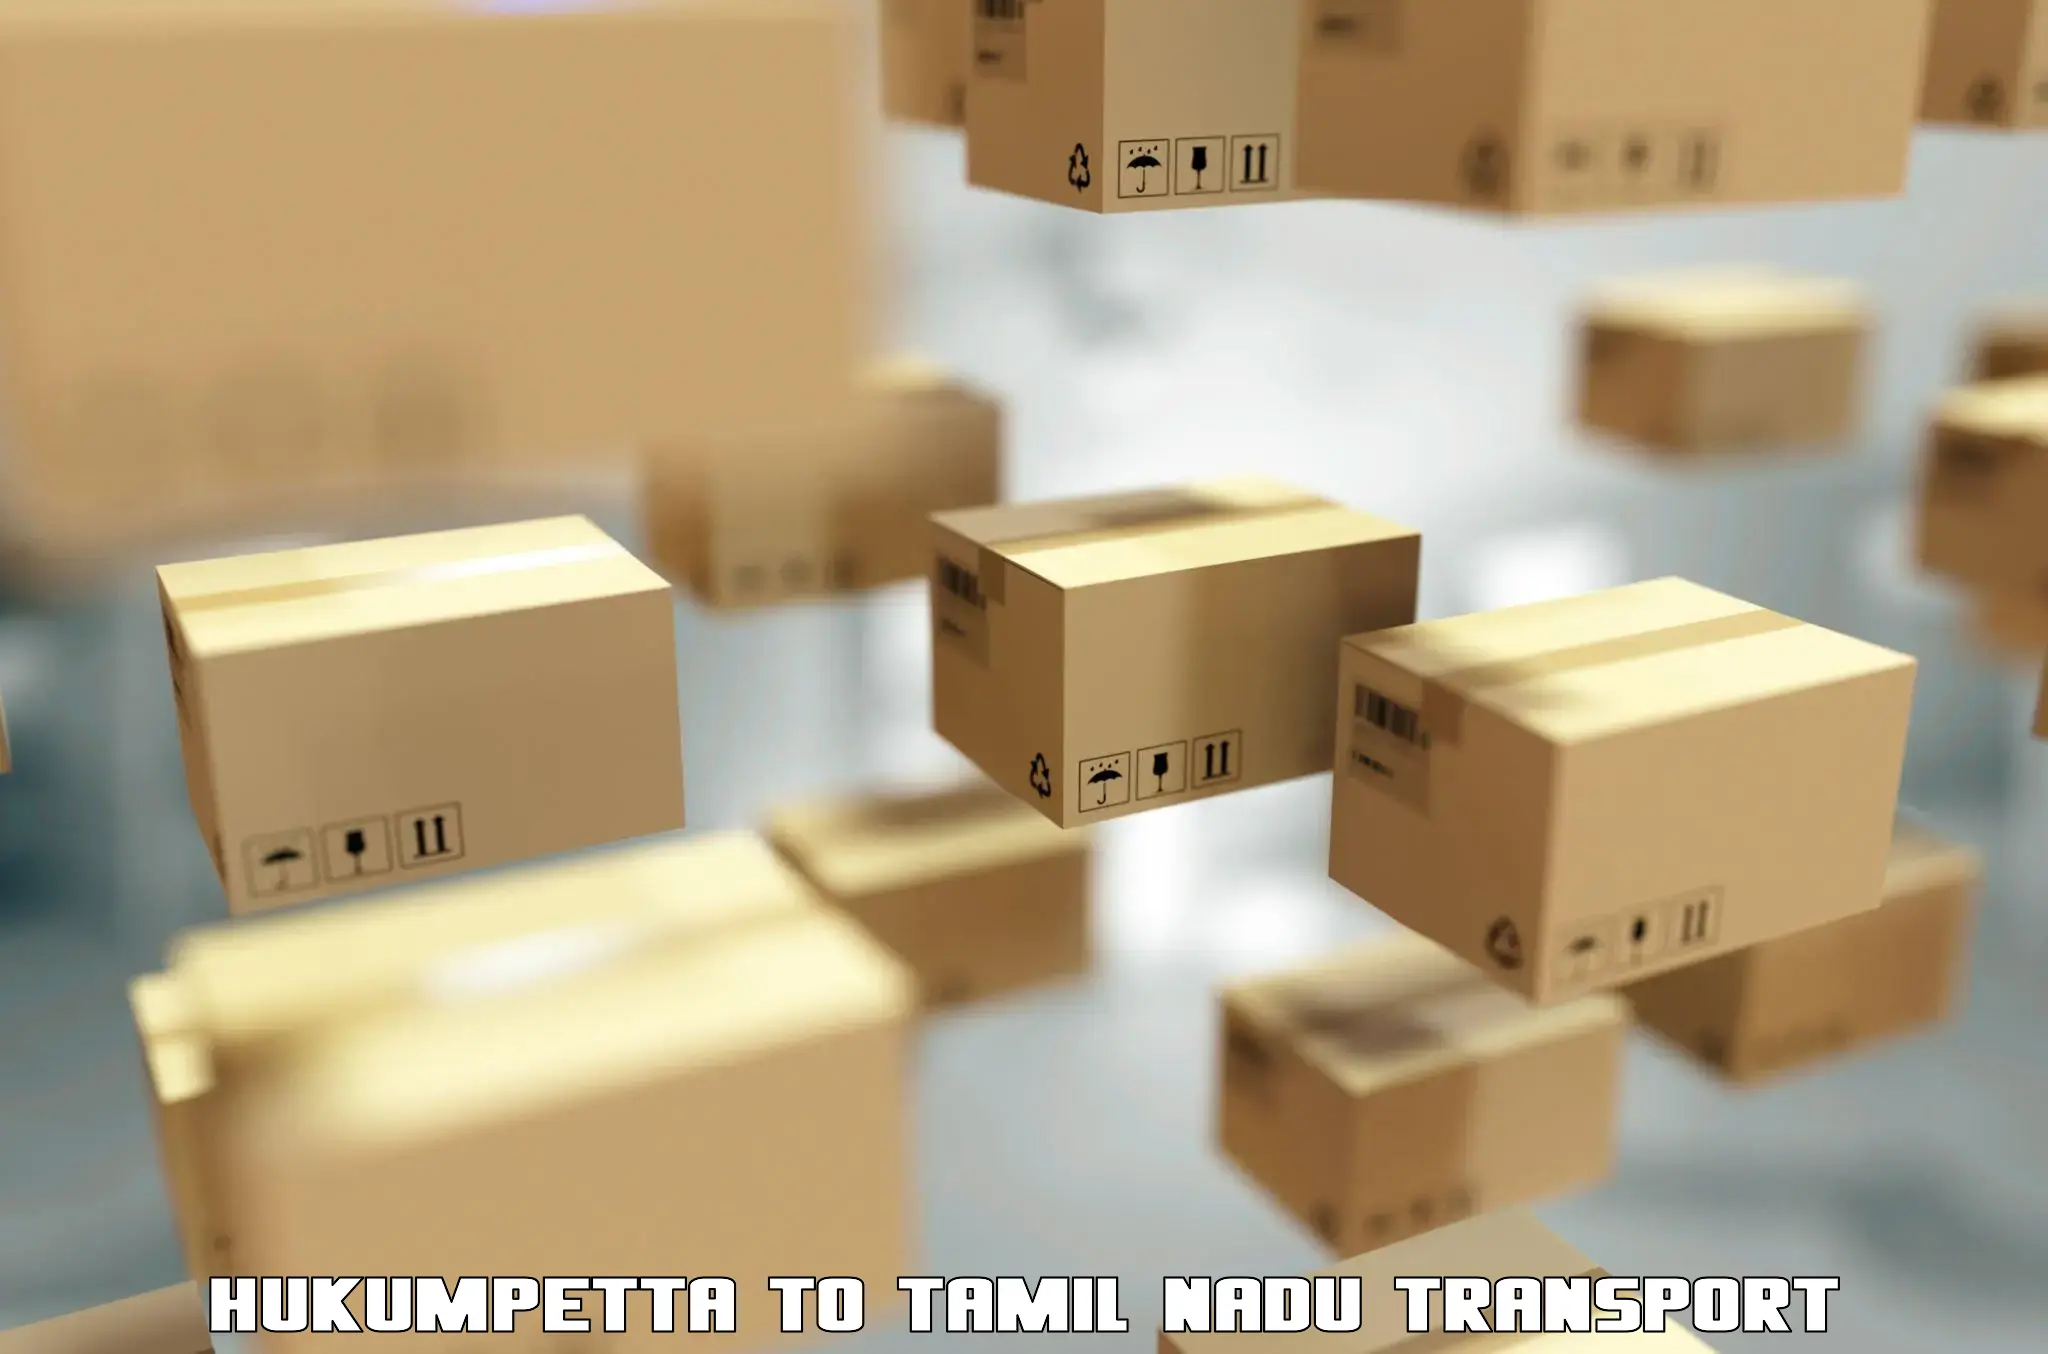 Container transport service Hukumpetta to Udumalpet